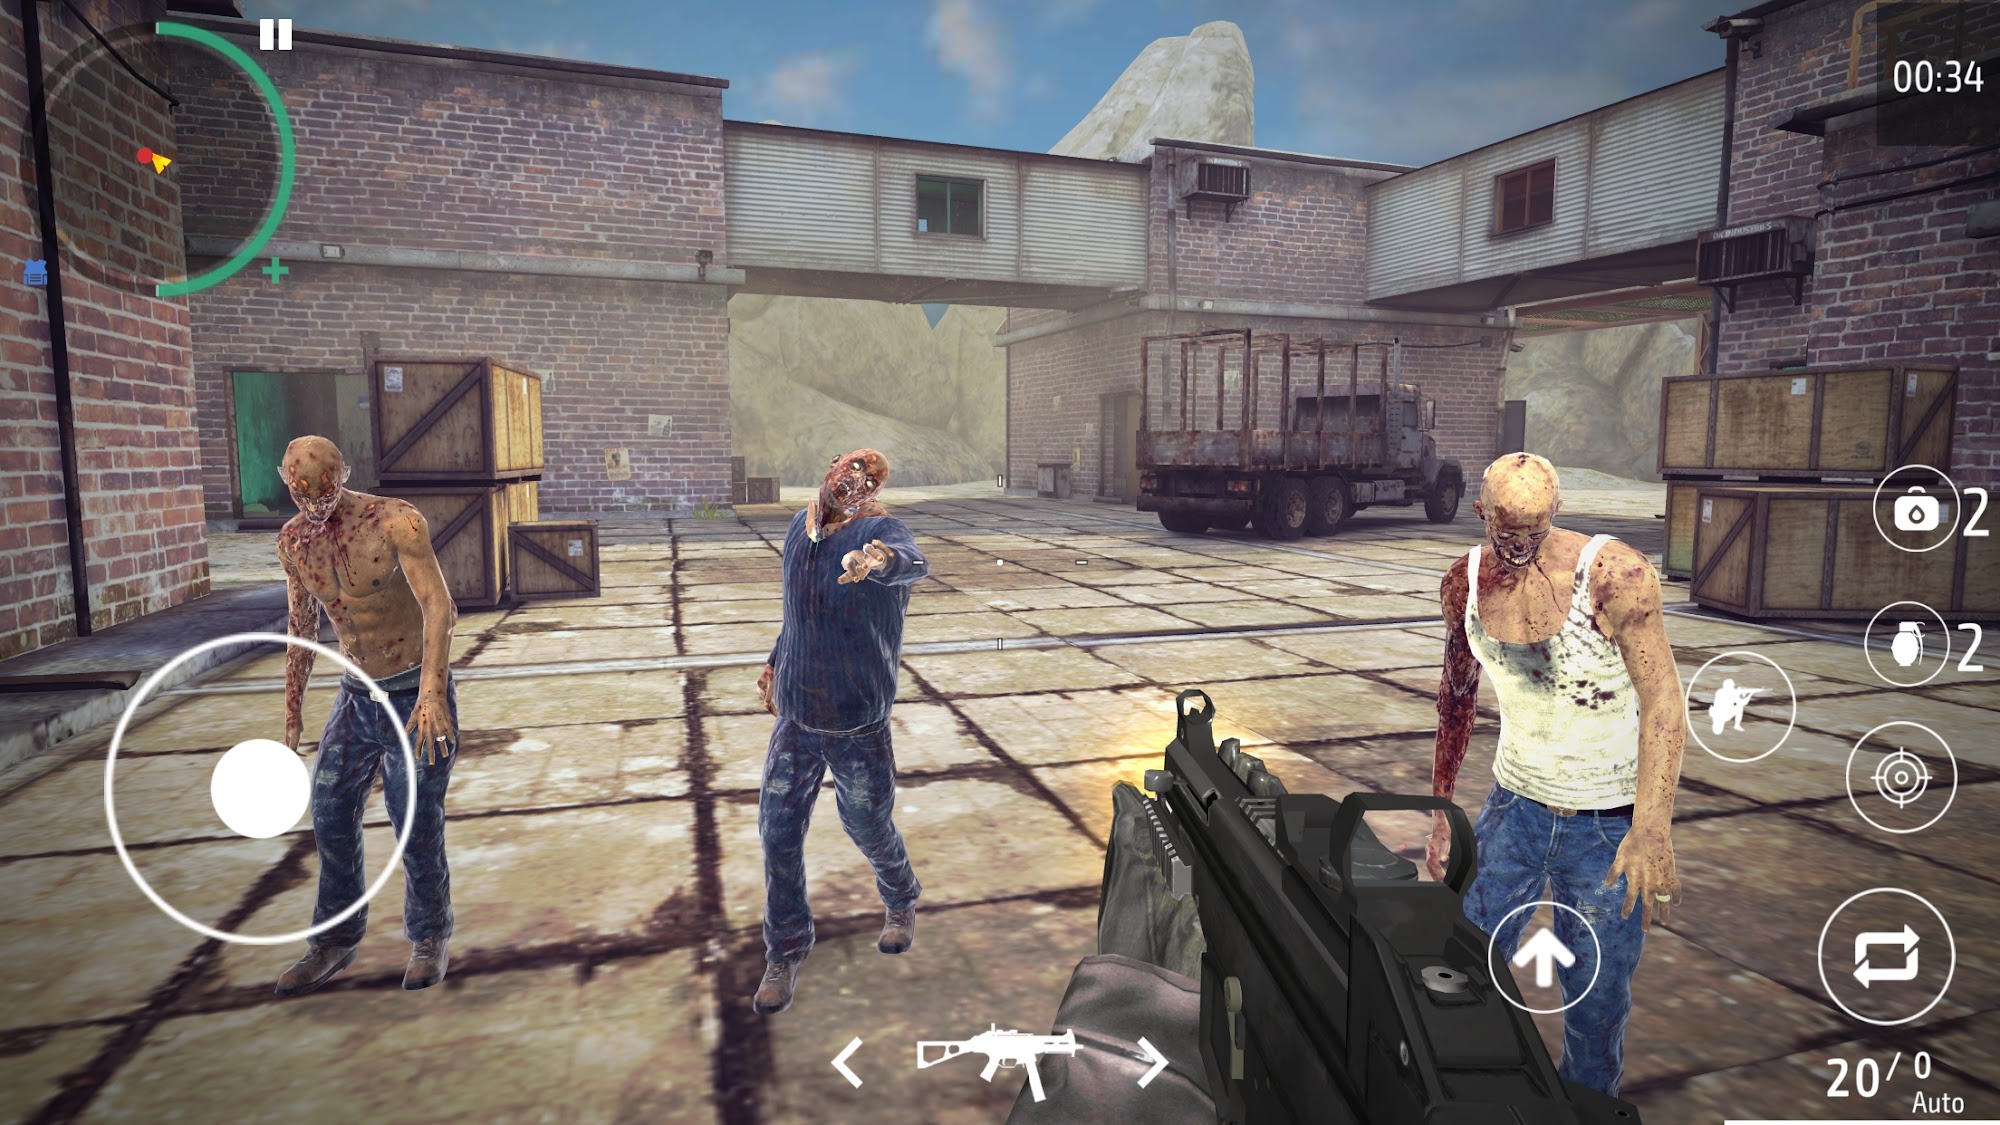 Скачать Zombie Shooter - fps games: Android Зомби игра на телефон и планшет.